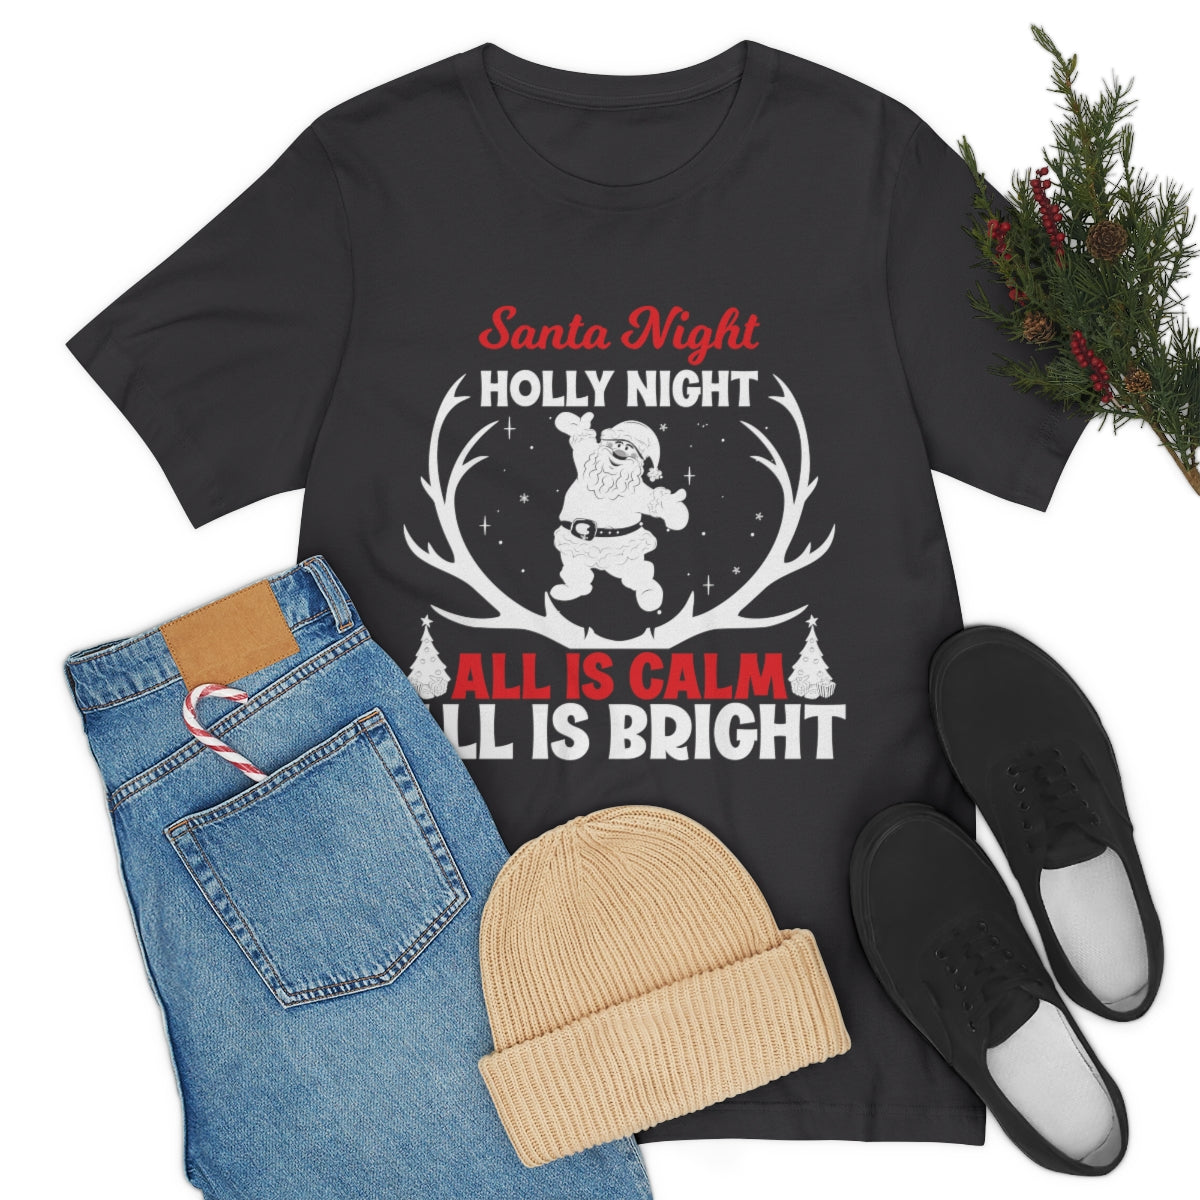 Classic Unisex Christmas T-shirt - Santa Night Holly Night All Is Calm All Is Bright Printify